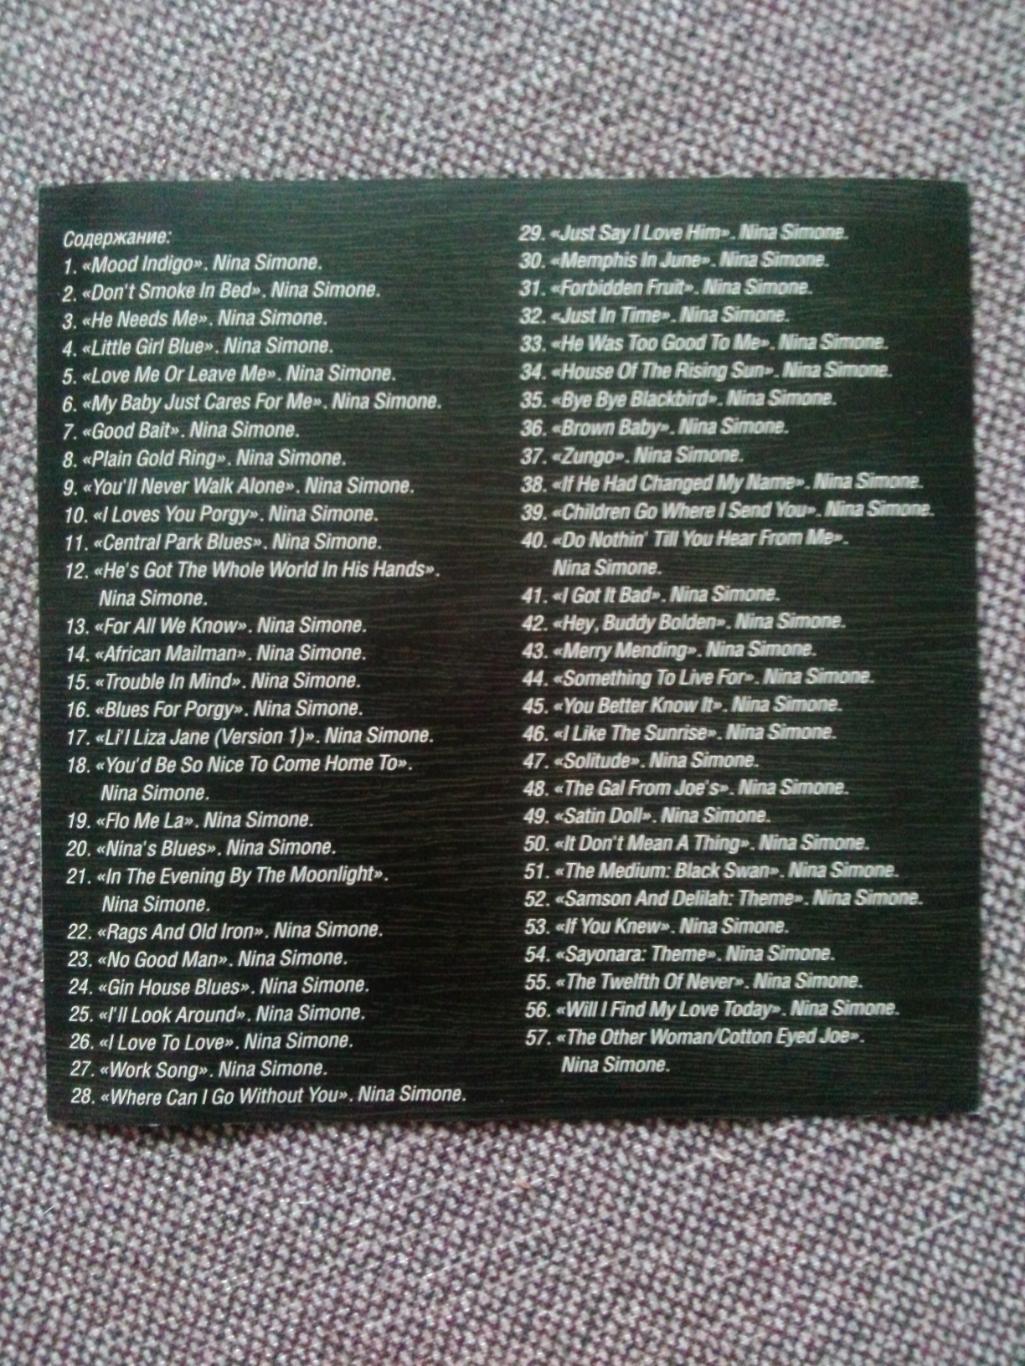 MP - 3 CD диск : Нина Симон (Nina Simone) 1958 - 1963 гг. (6 альбомов) Джаз-блюз 1